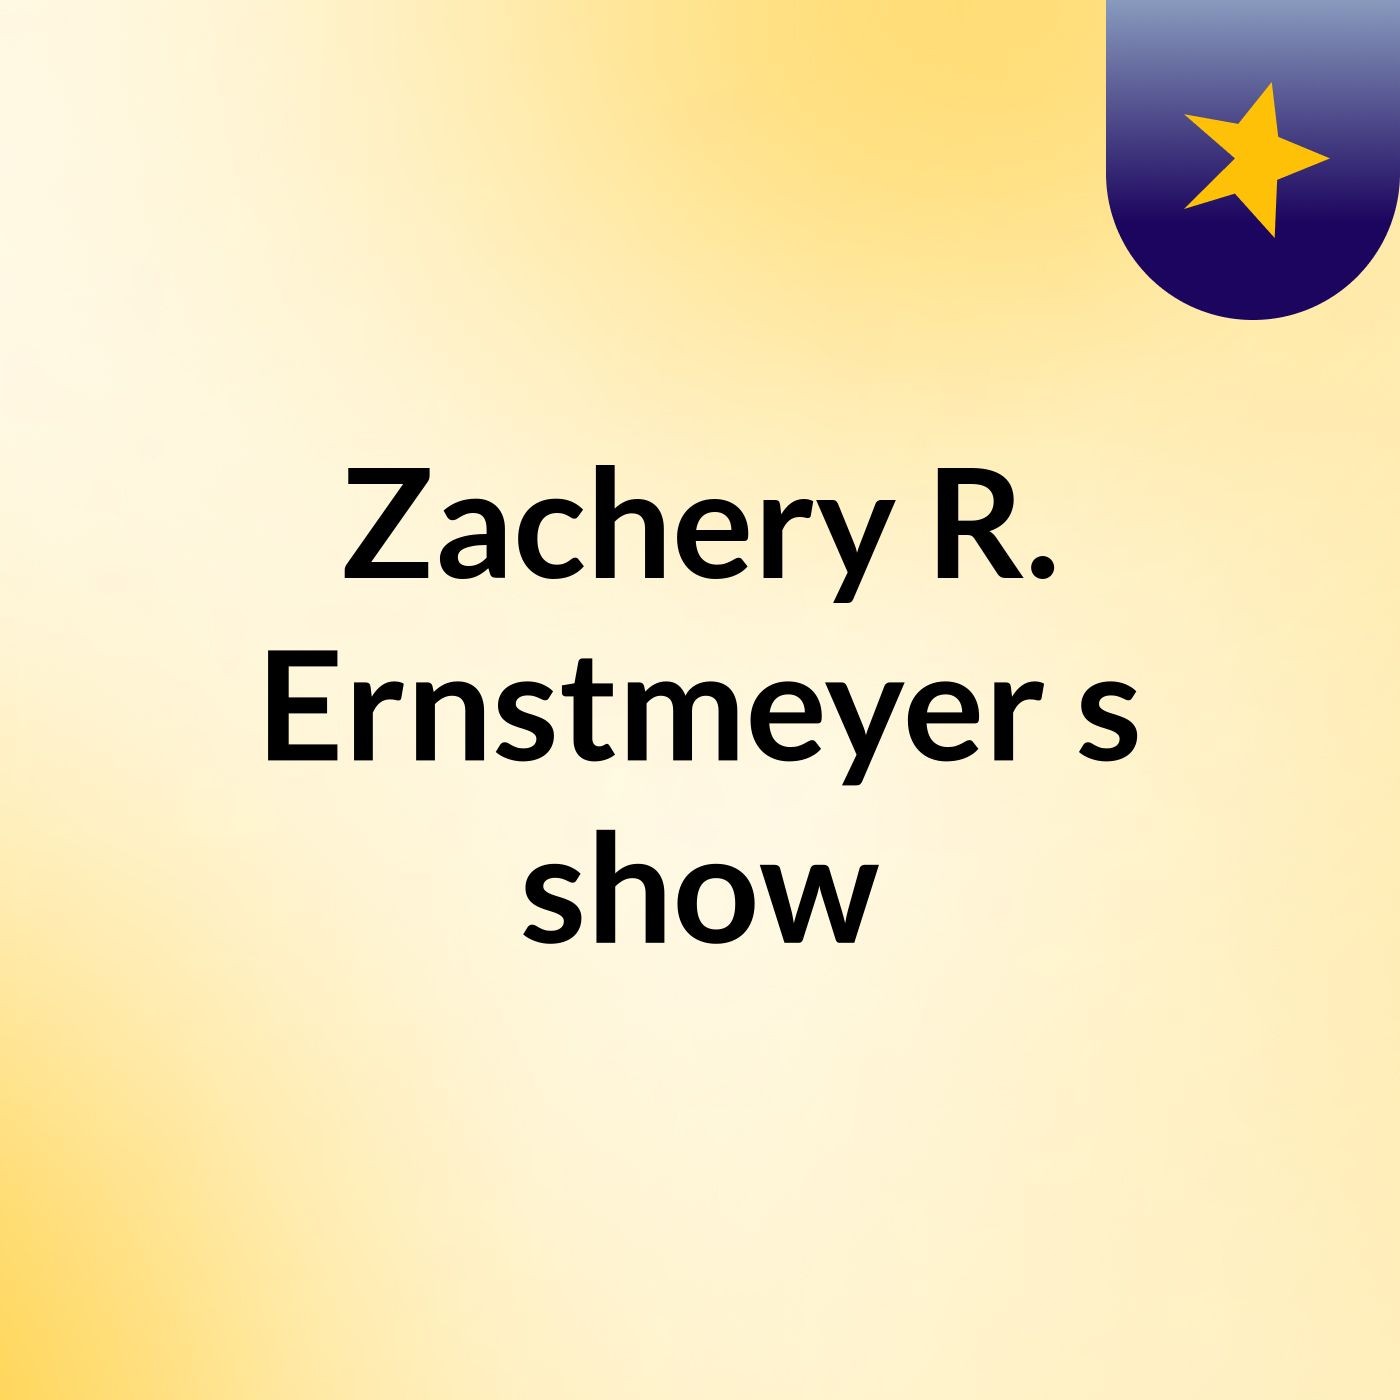 Zachery R. Ernstmeyer's show